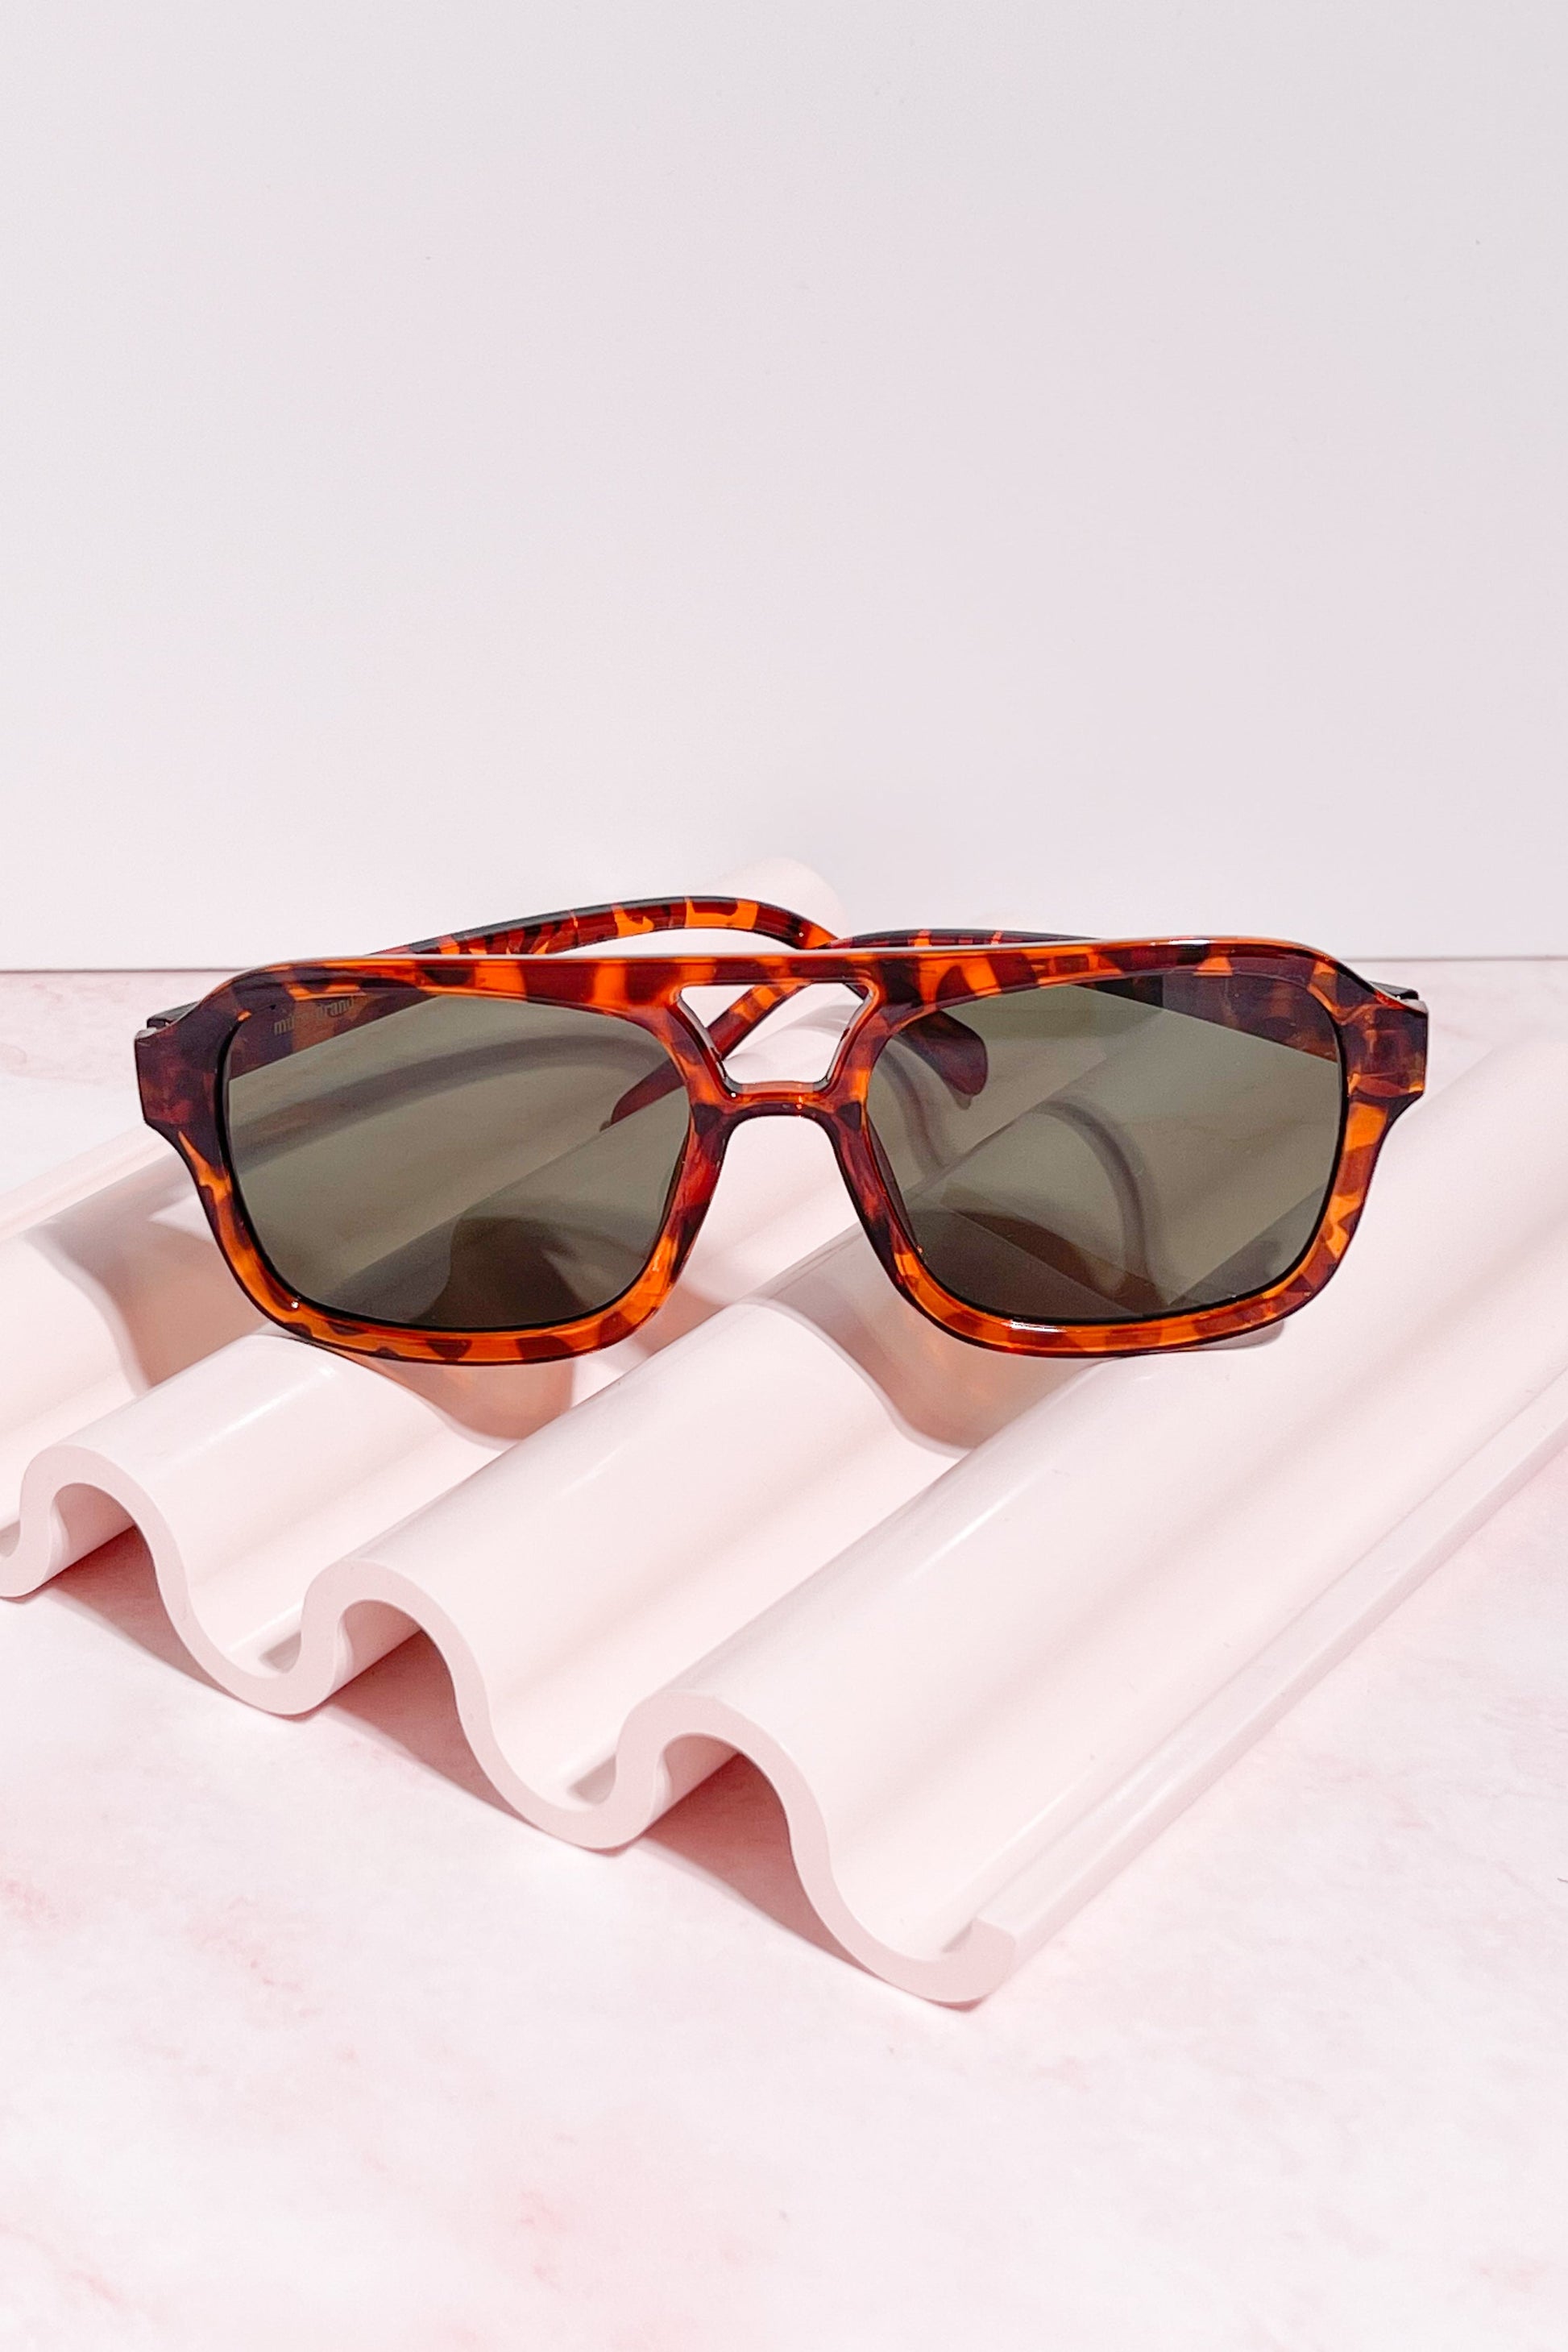 Sandbar Aviator Sunglasses Sunglasses Mulberry & Grand Tortoise with Green Lens 